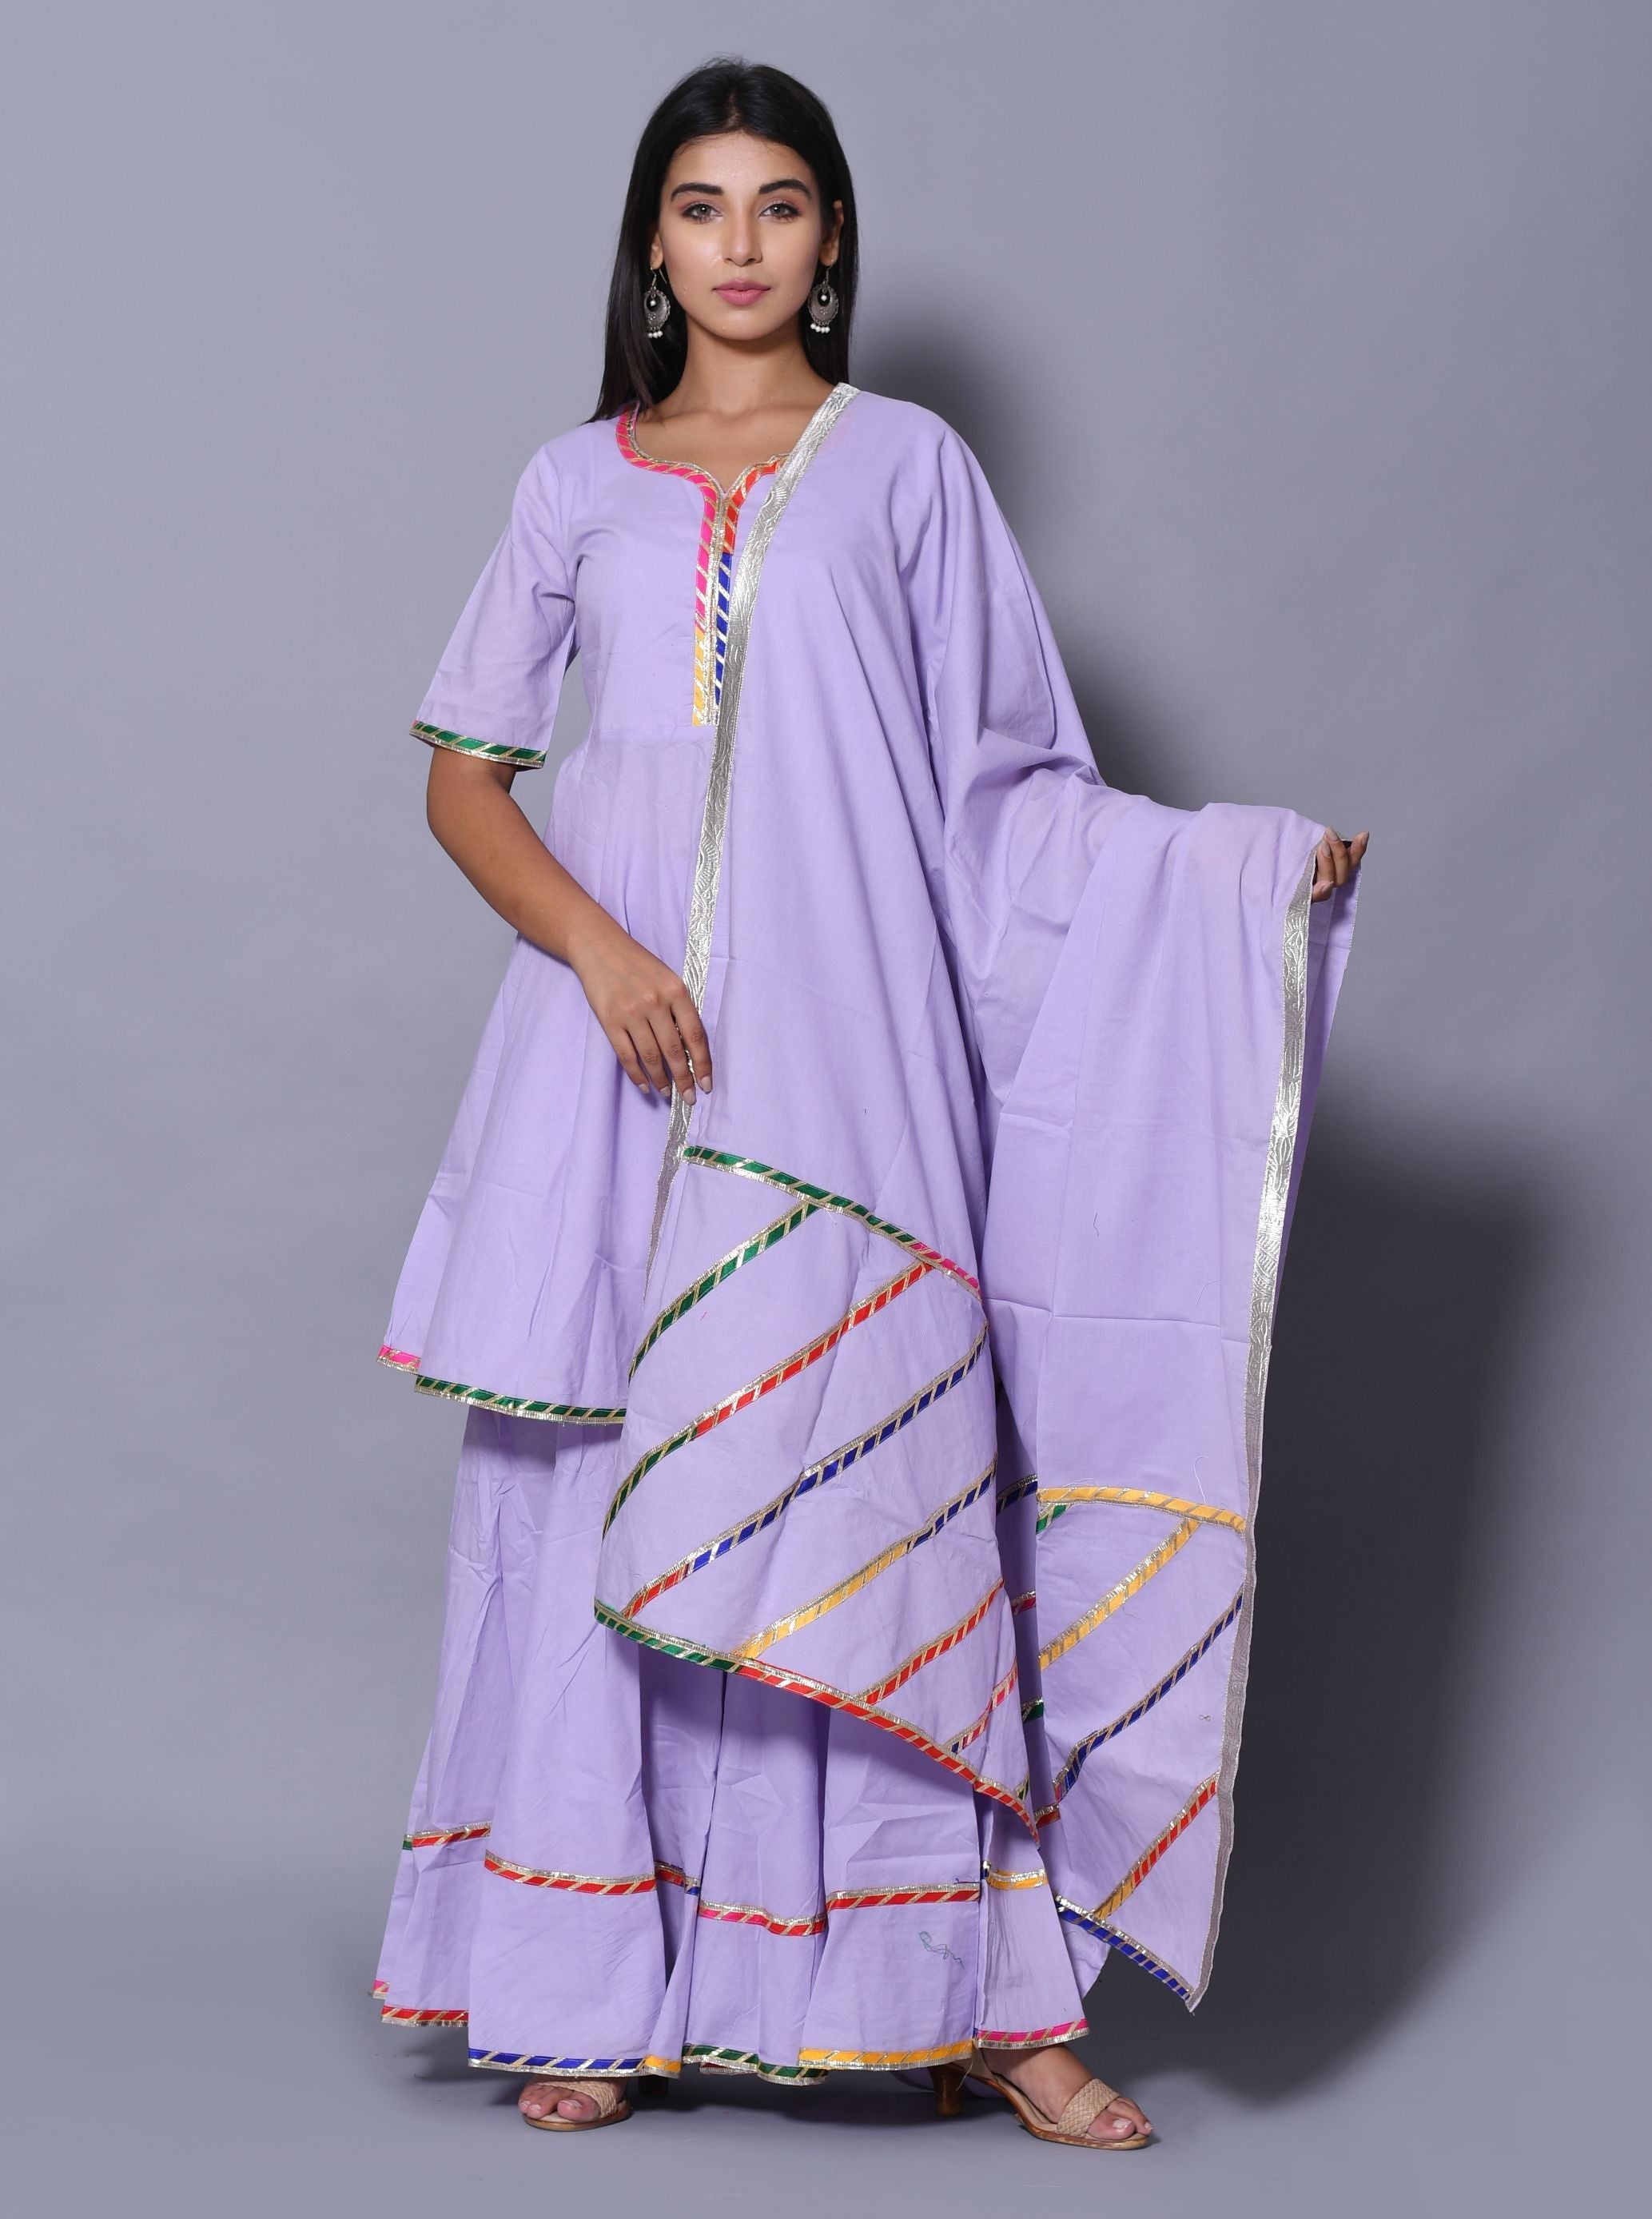 Women's Single-Piece Magenta Cotton Dress With Hand Block Printed Motifs. - Saras The Label